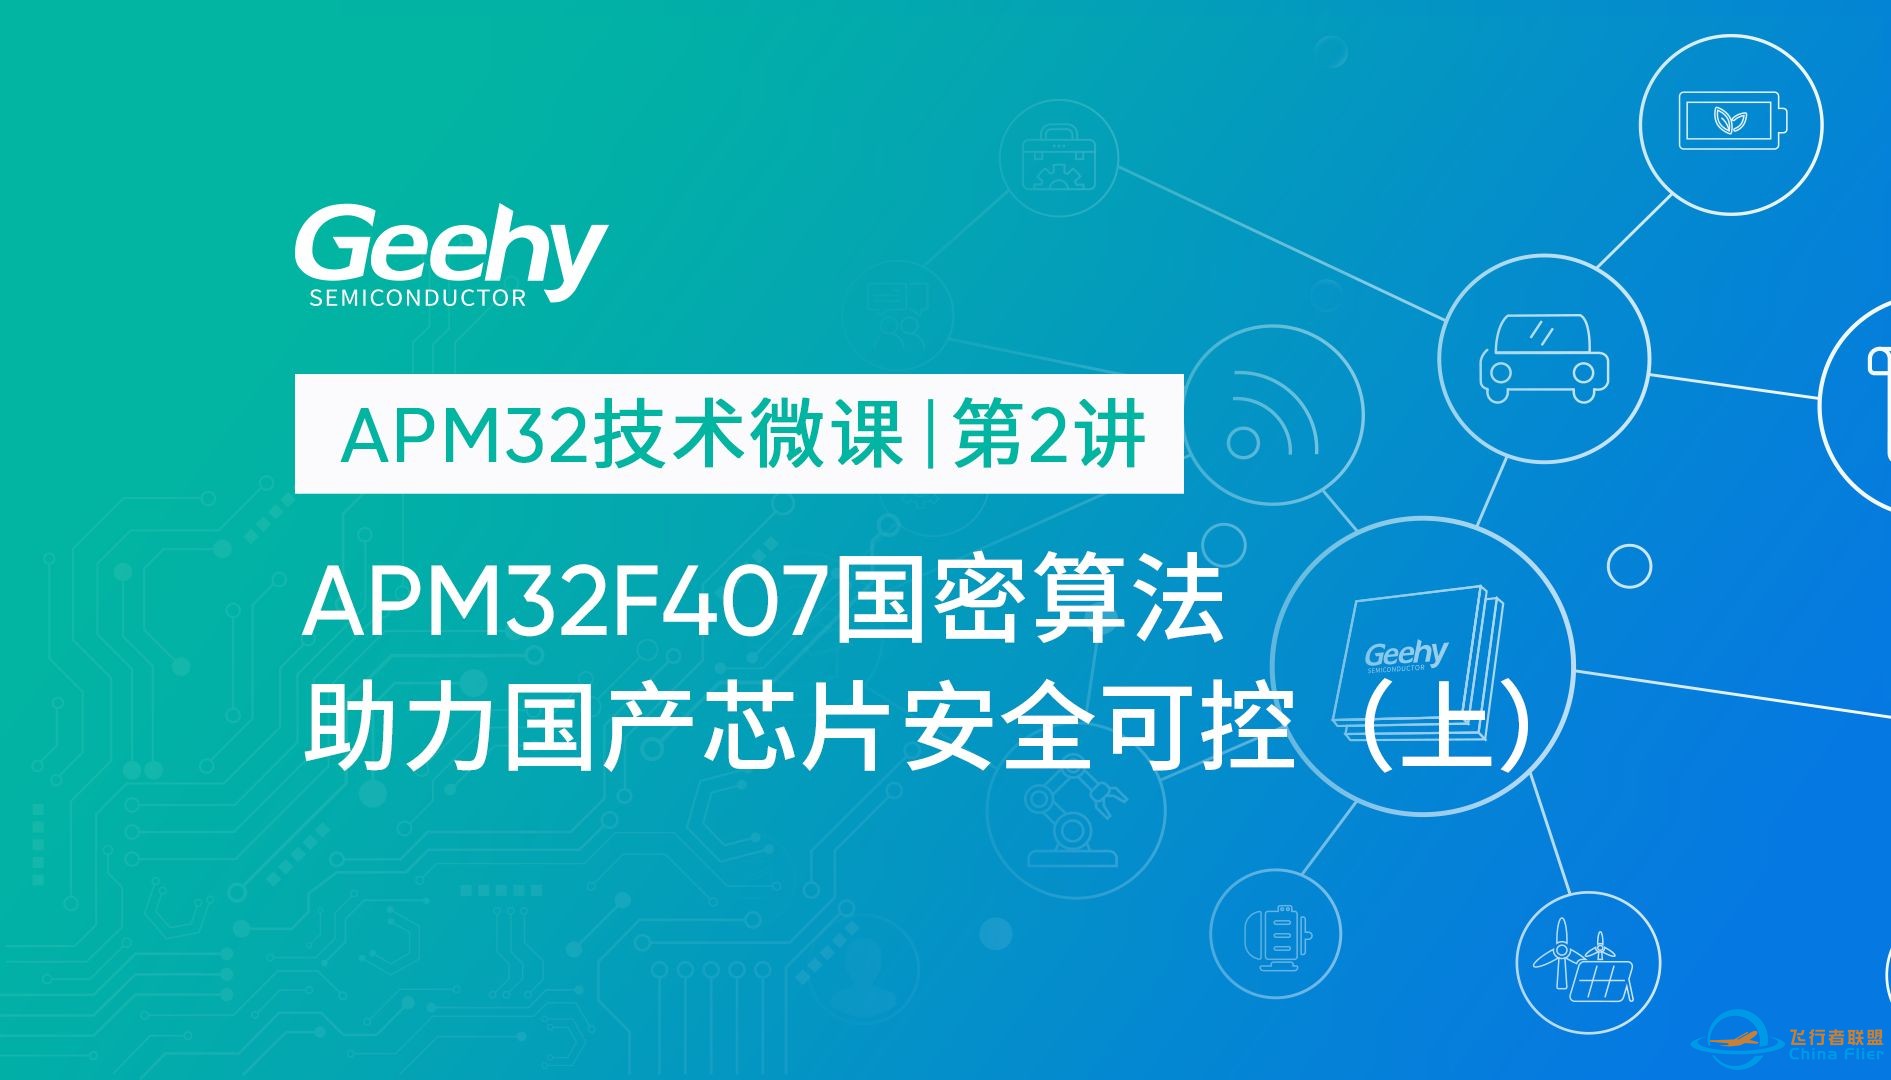 【APM32技术微课 | 第2讲】APM32F407国密算法助力国产芯片安全可控（上）-1.jpg